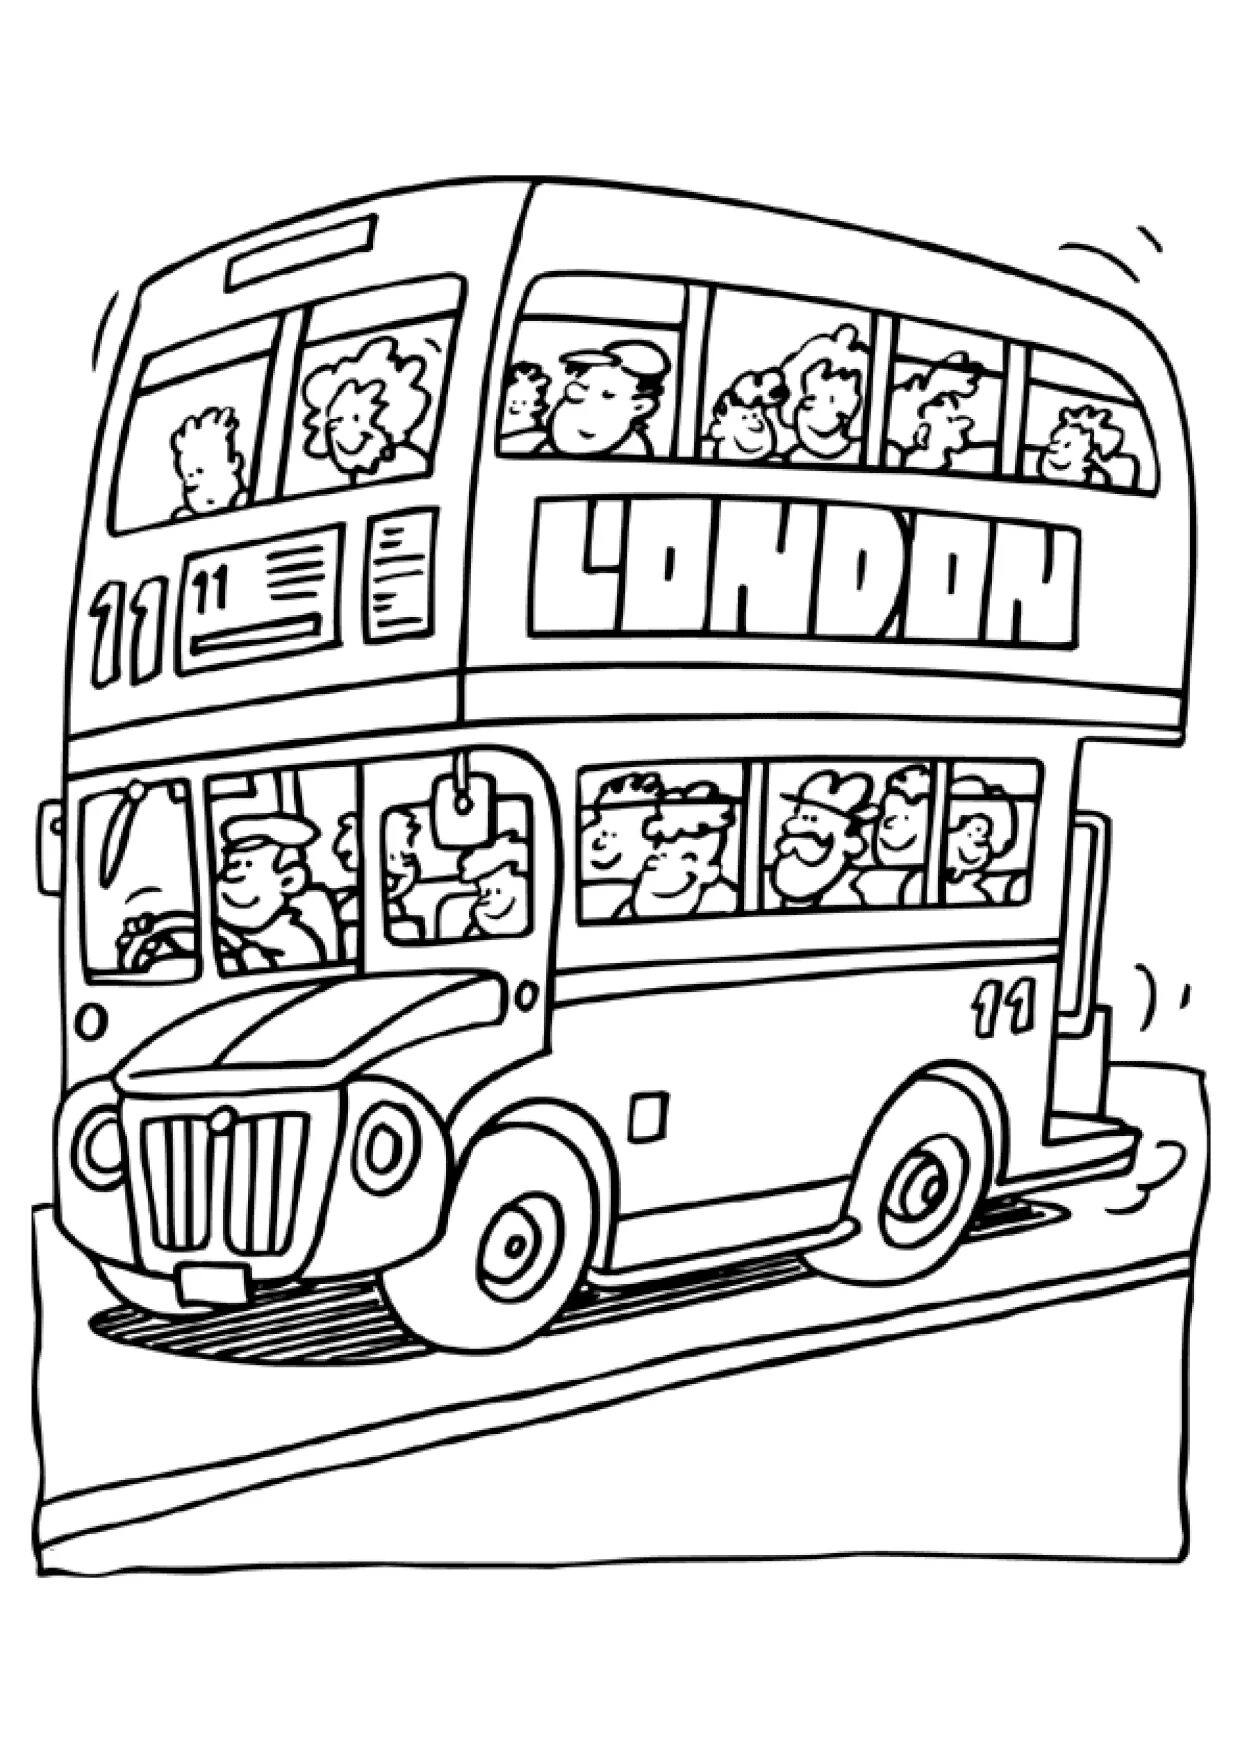 English bus #1